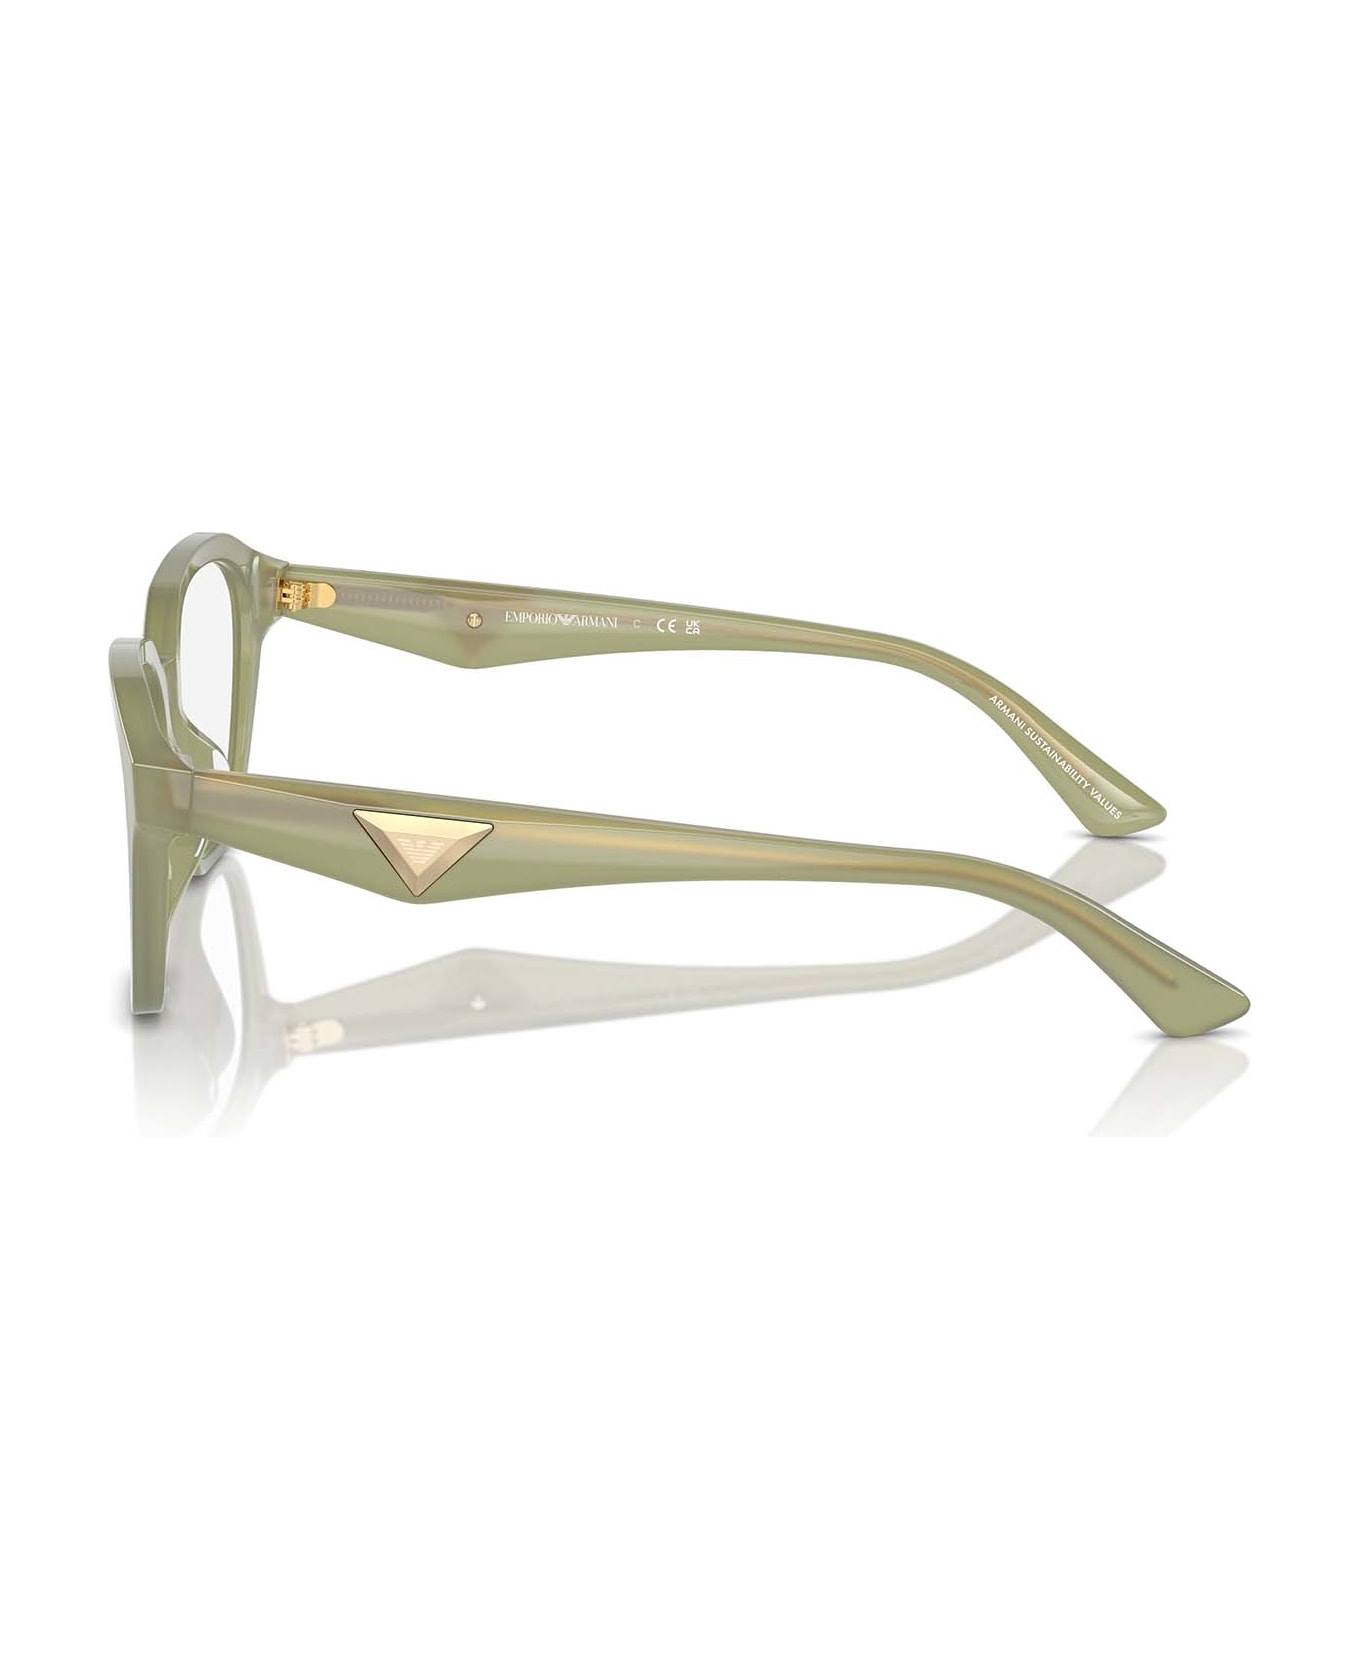 Emporio Armani Ea3235u Shiny Opaline Green Glasses - Shiny Opaline Green